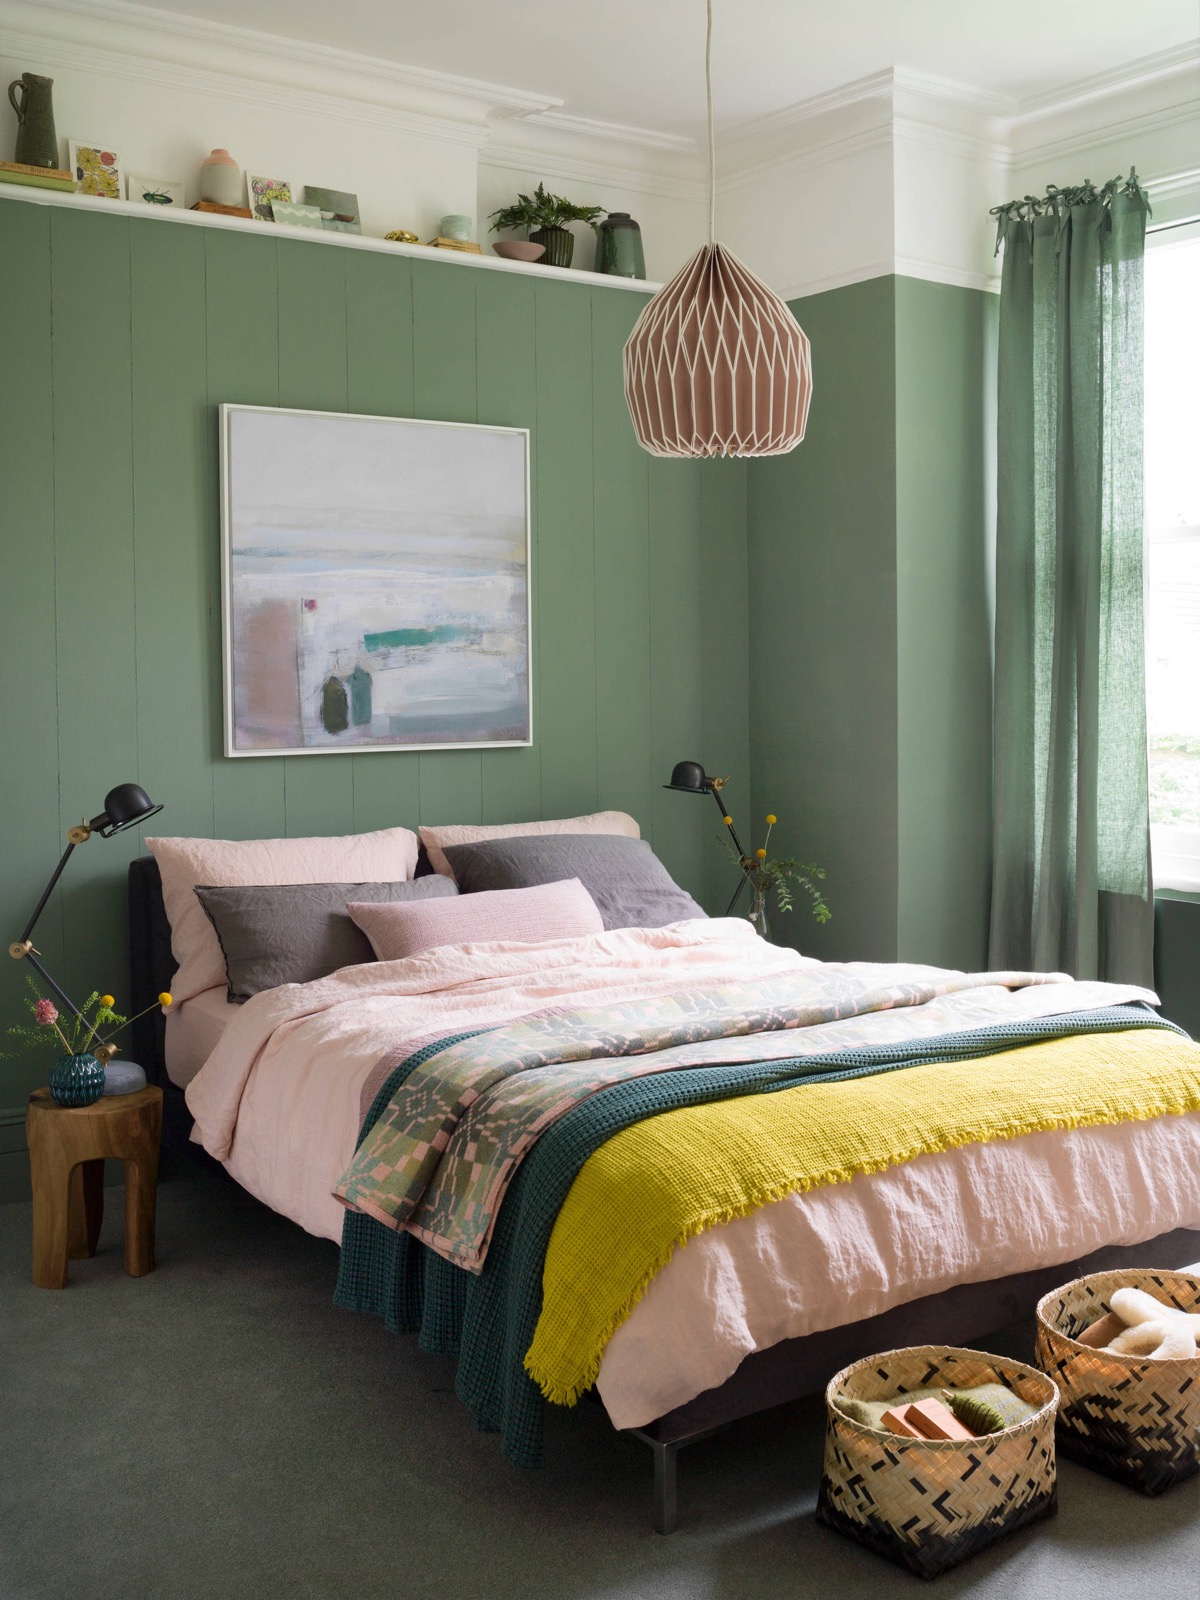 A Bedroom In Green